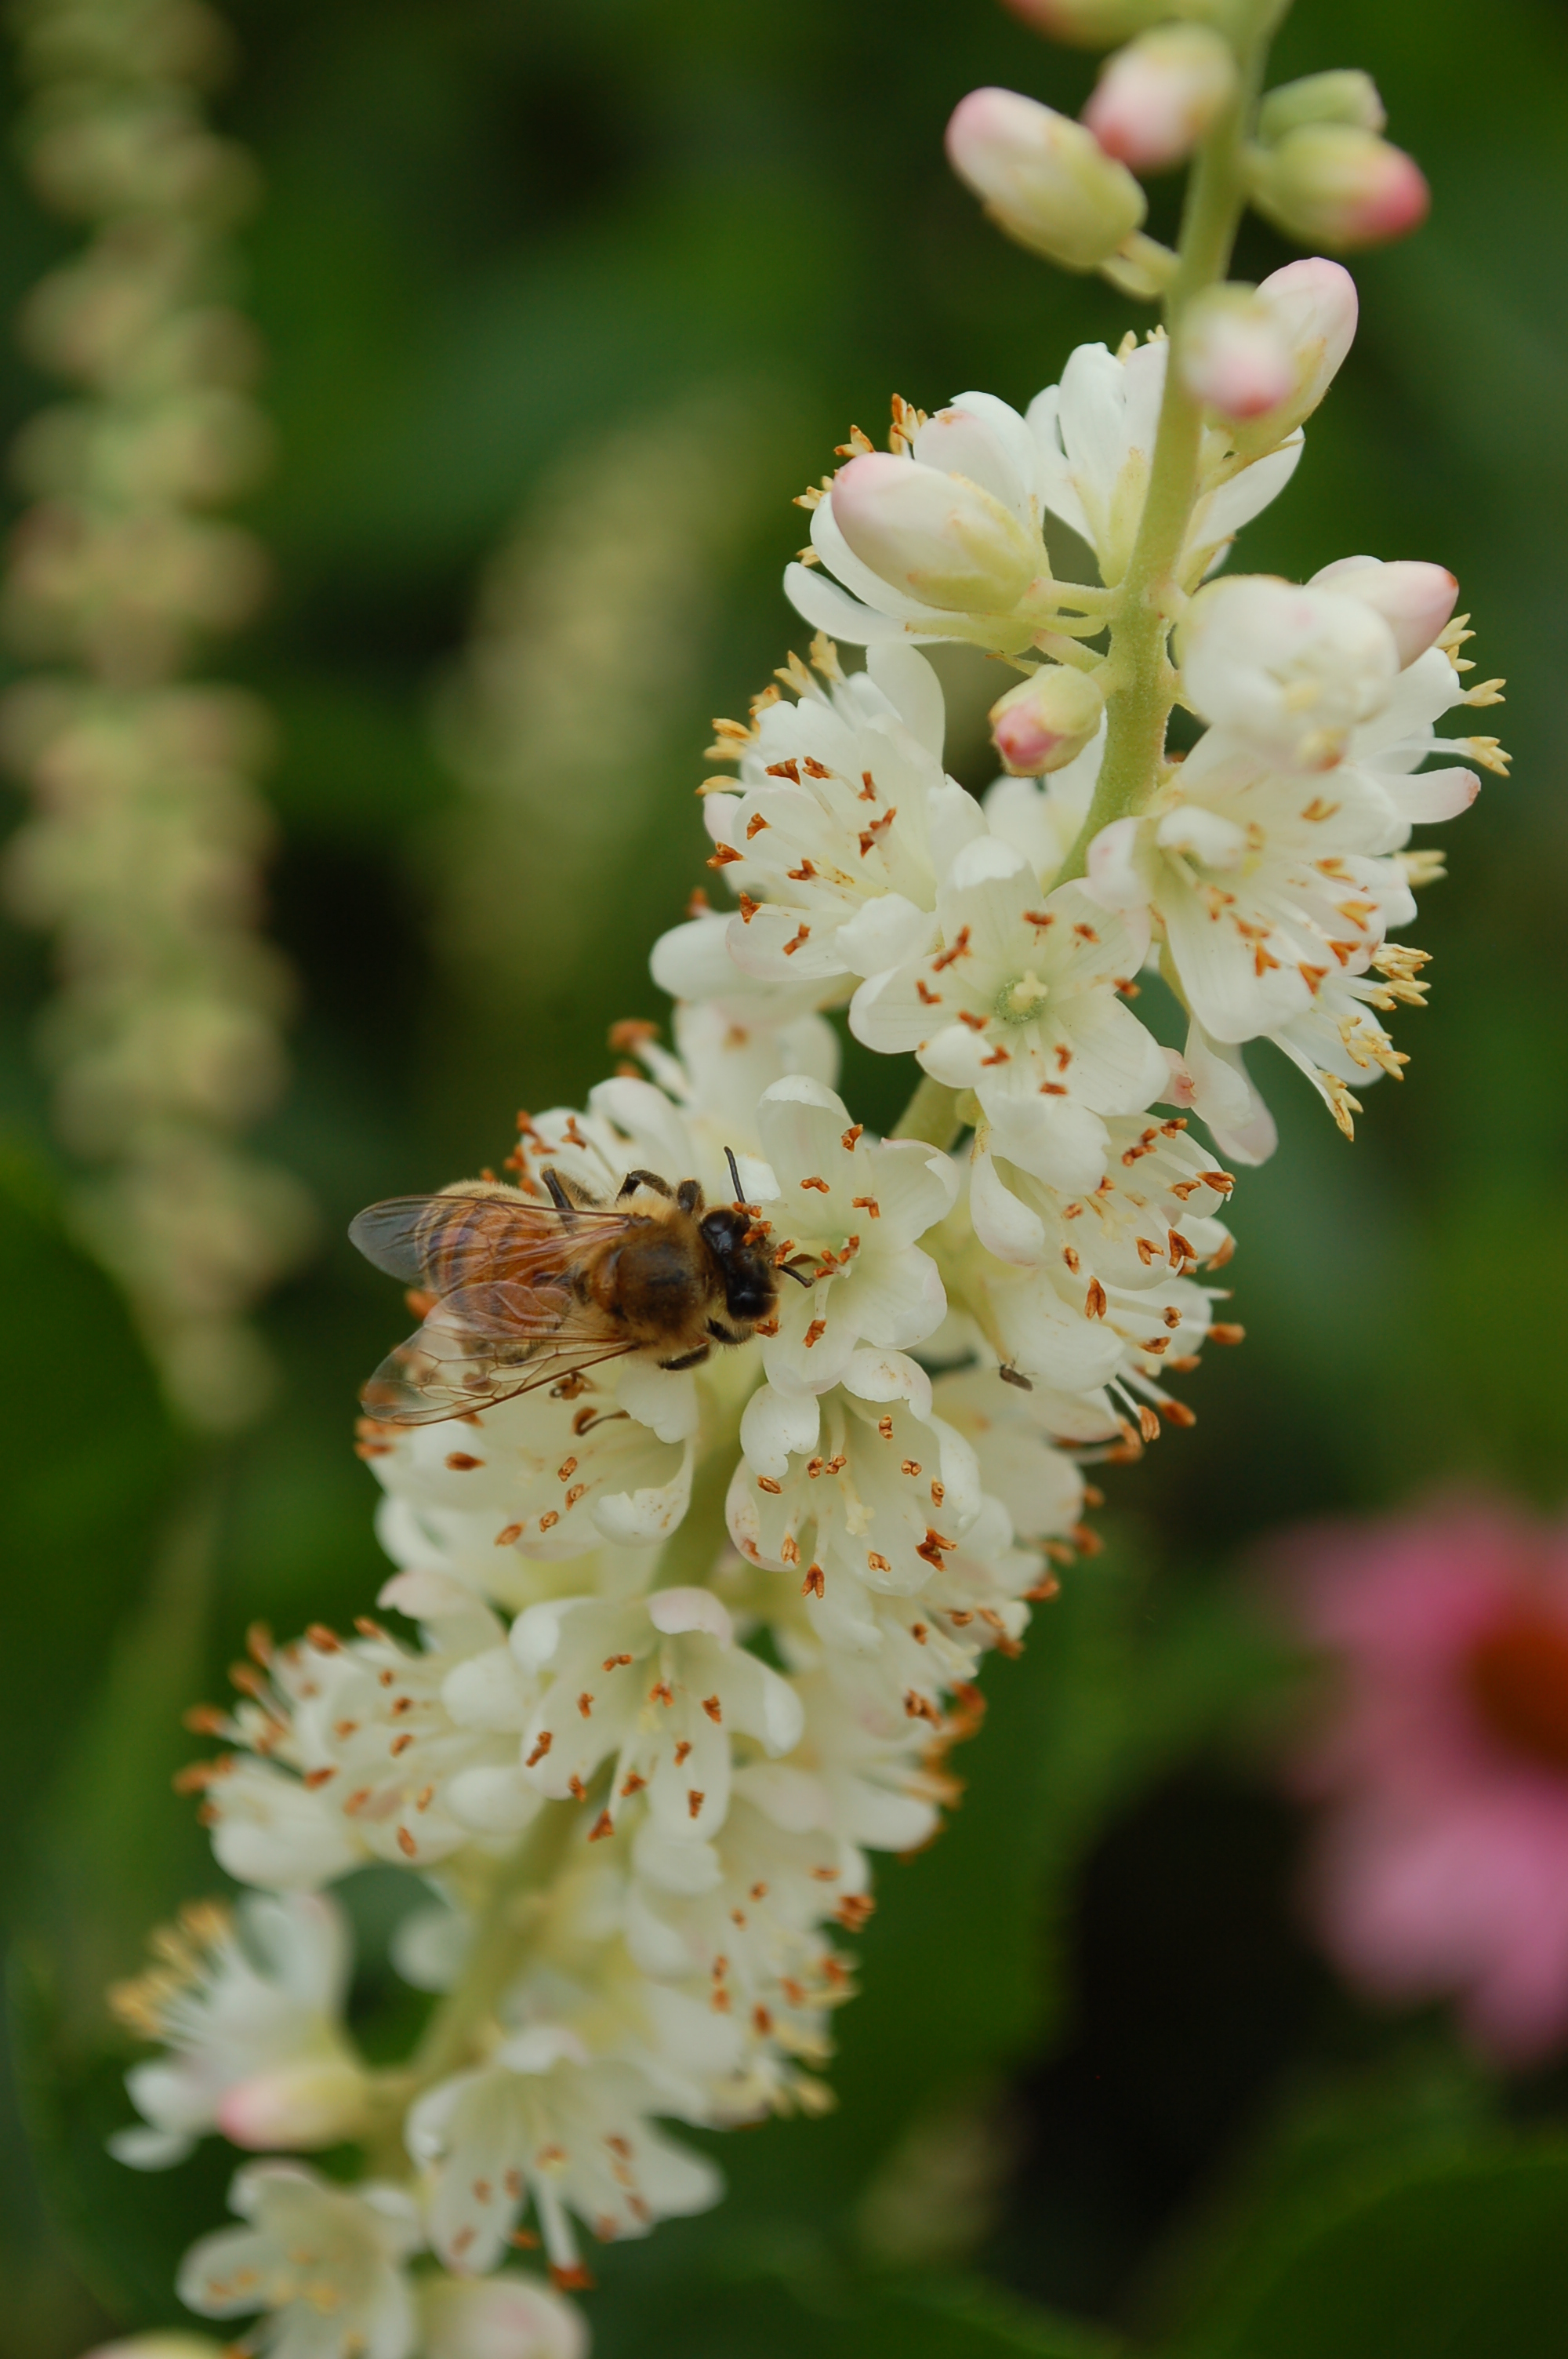 Honeybee on clethra blossom, Native Plant Border, August 15, 2017.